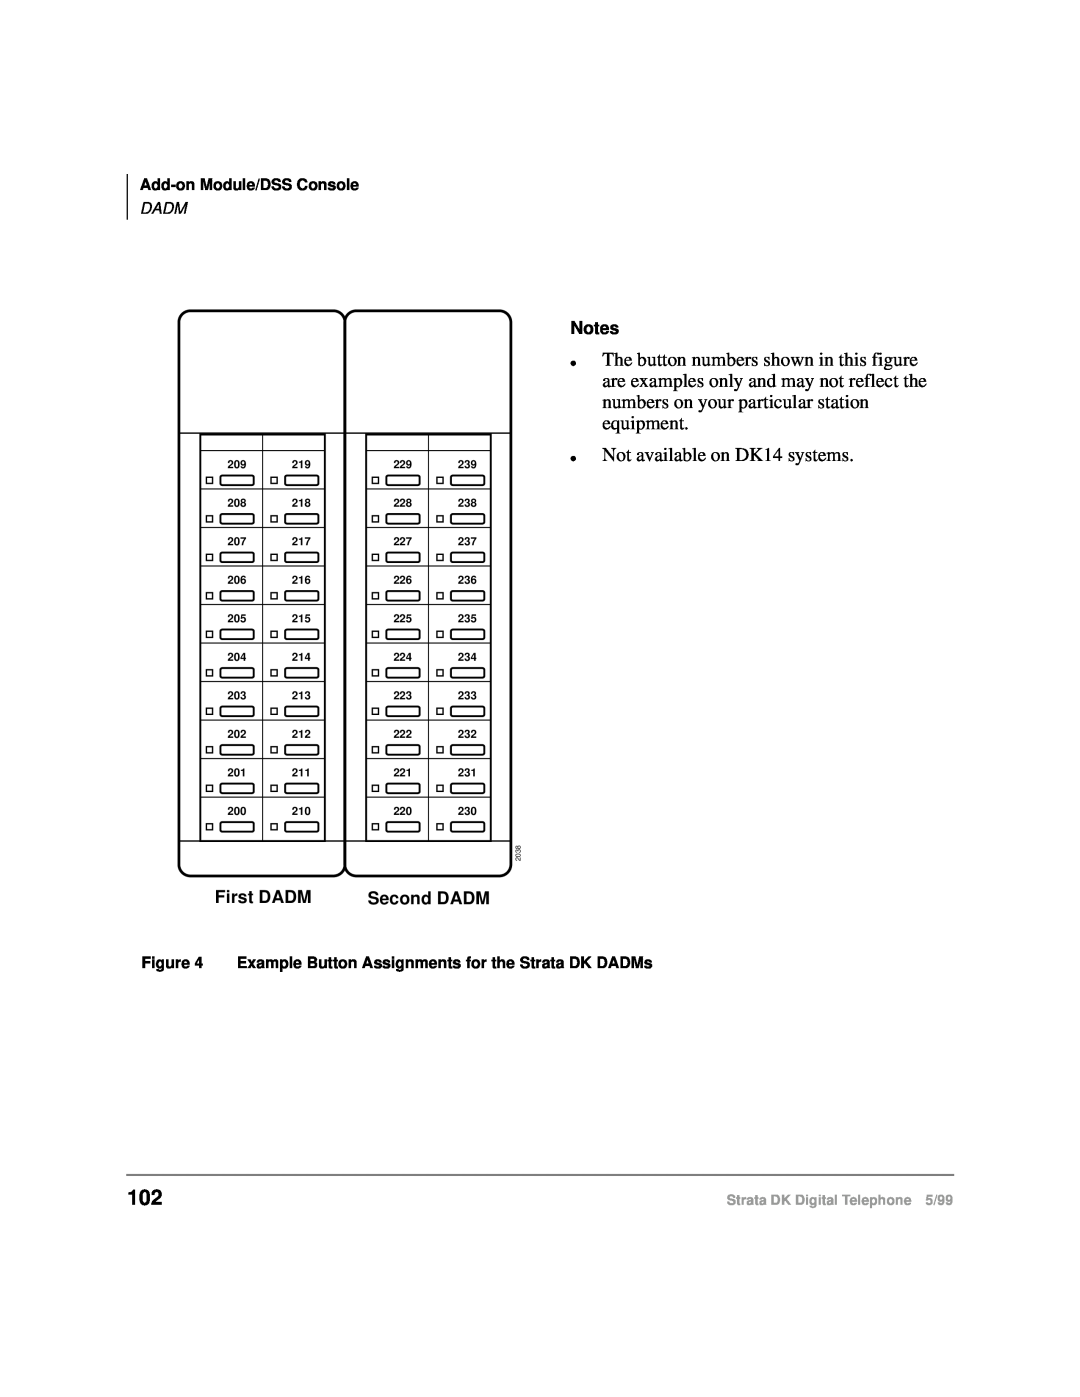 Toshiba CT manual First DADM, Second DADM, Strata DK Digital Telephone 5/99, 201 200, 221 220 